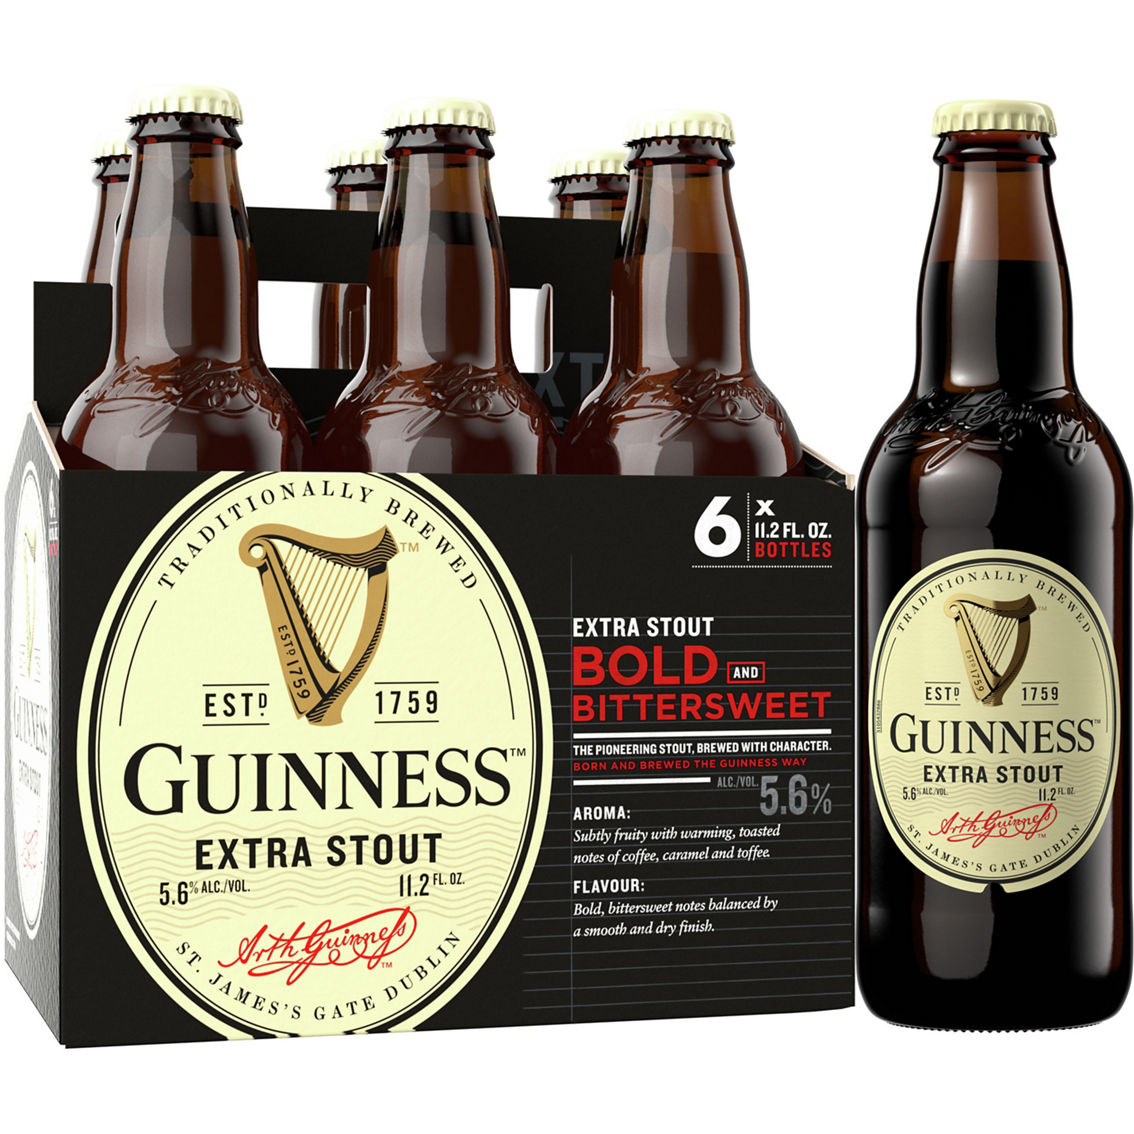 Guinness Extra Stout 11.2 oz. Bottle 6 pk. - Image 2 of 2